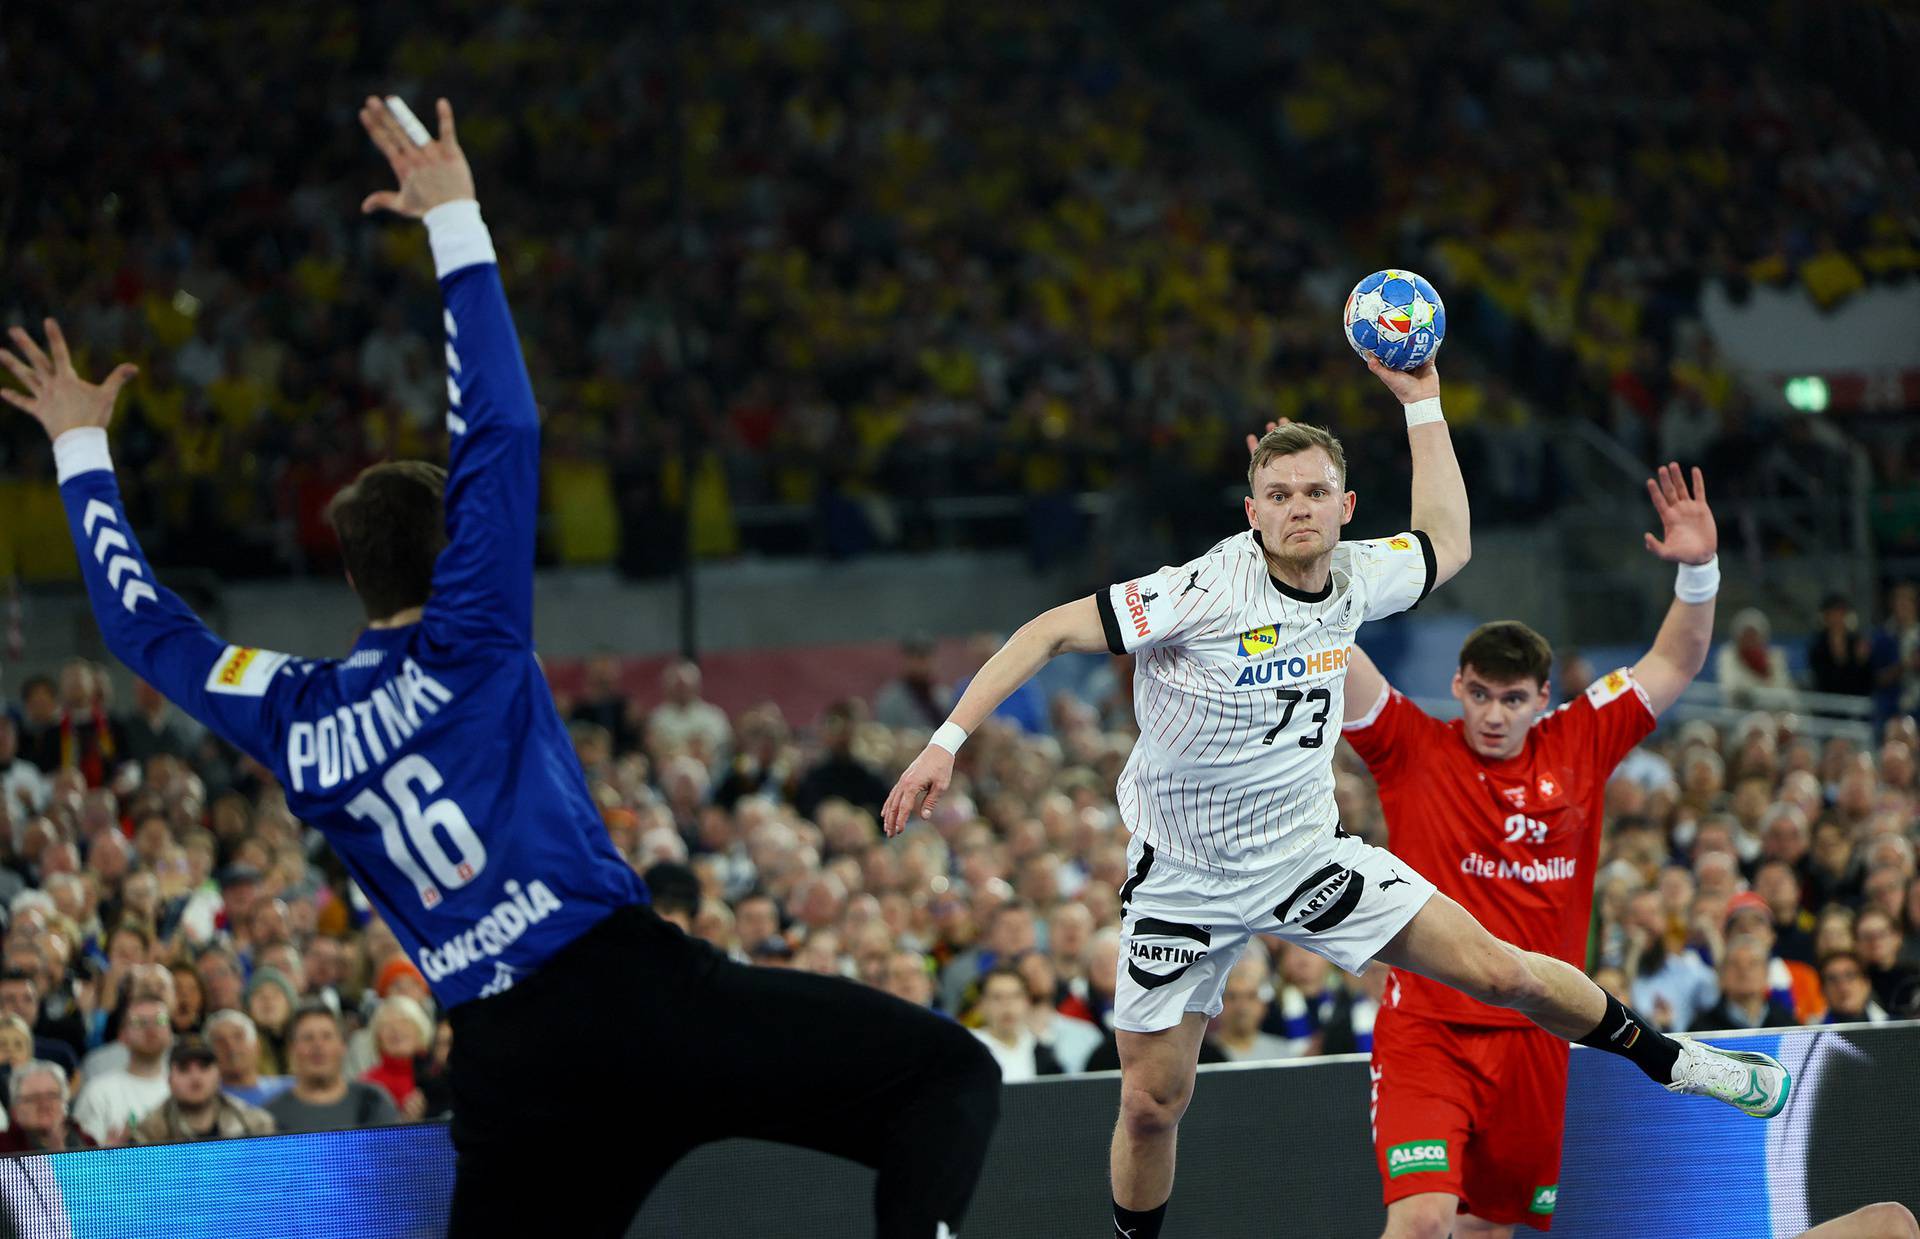 EHF 2024 Men's European Handball Championship - Preliminary Round - Group A - Germany v Switzerland